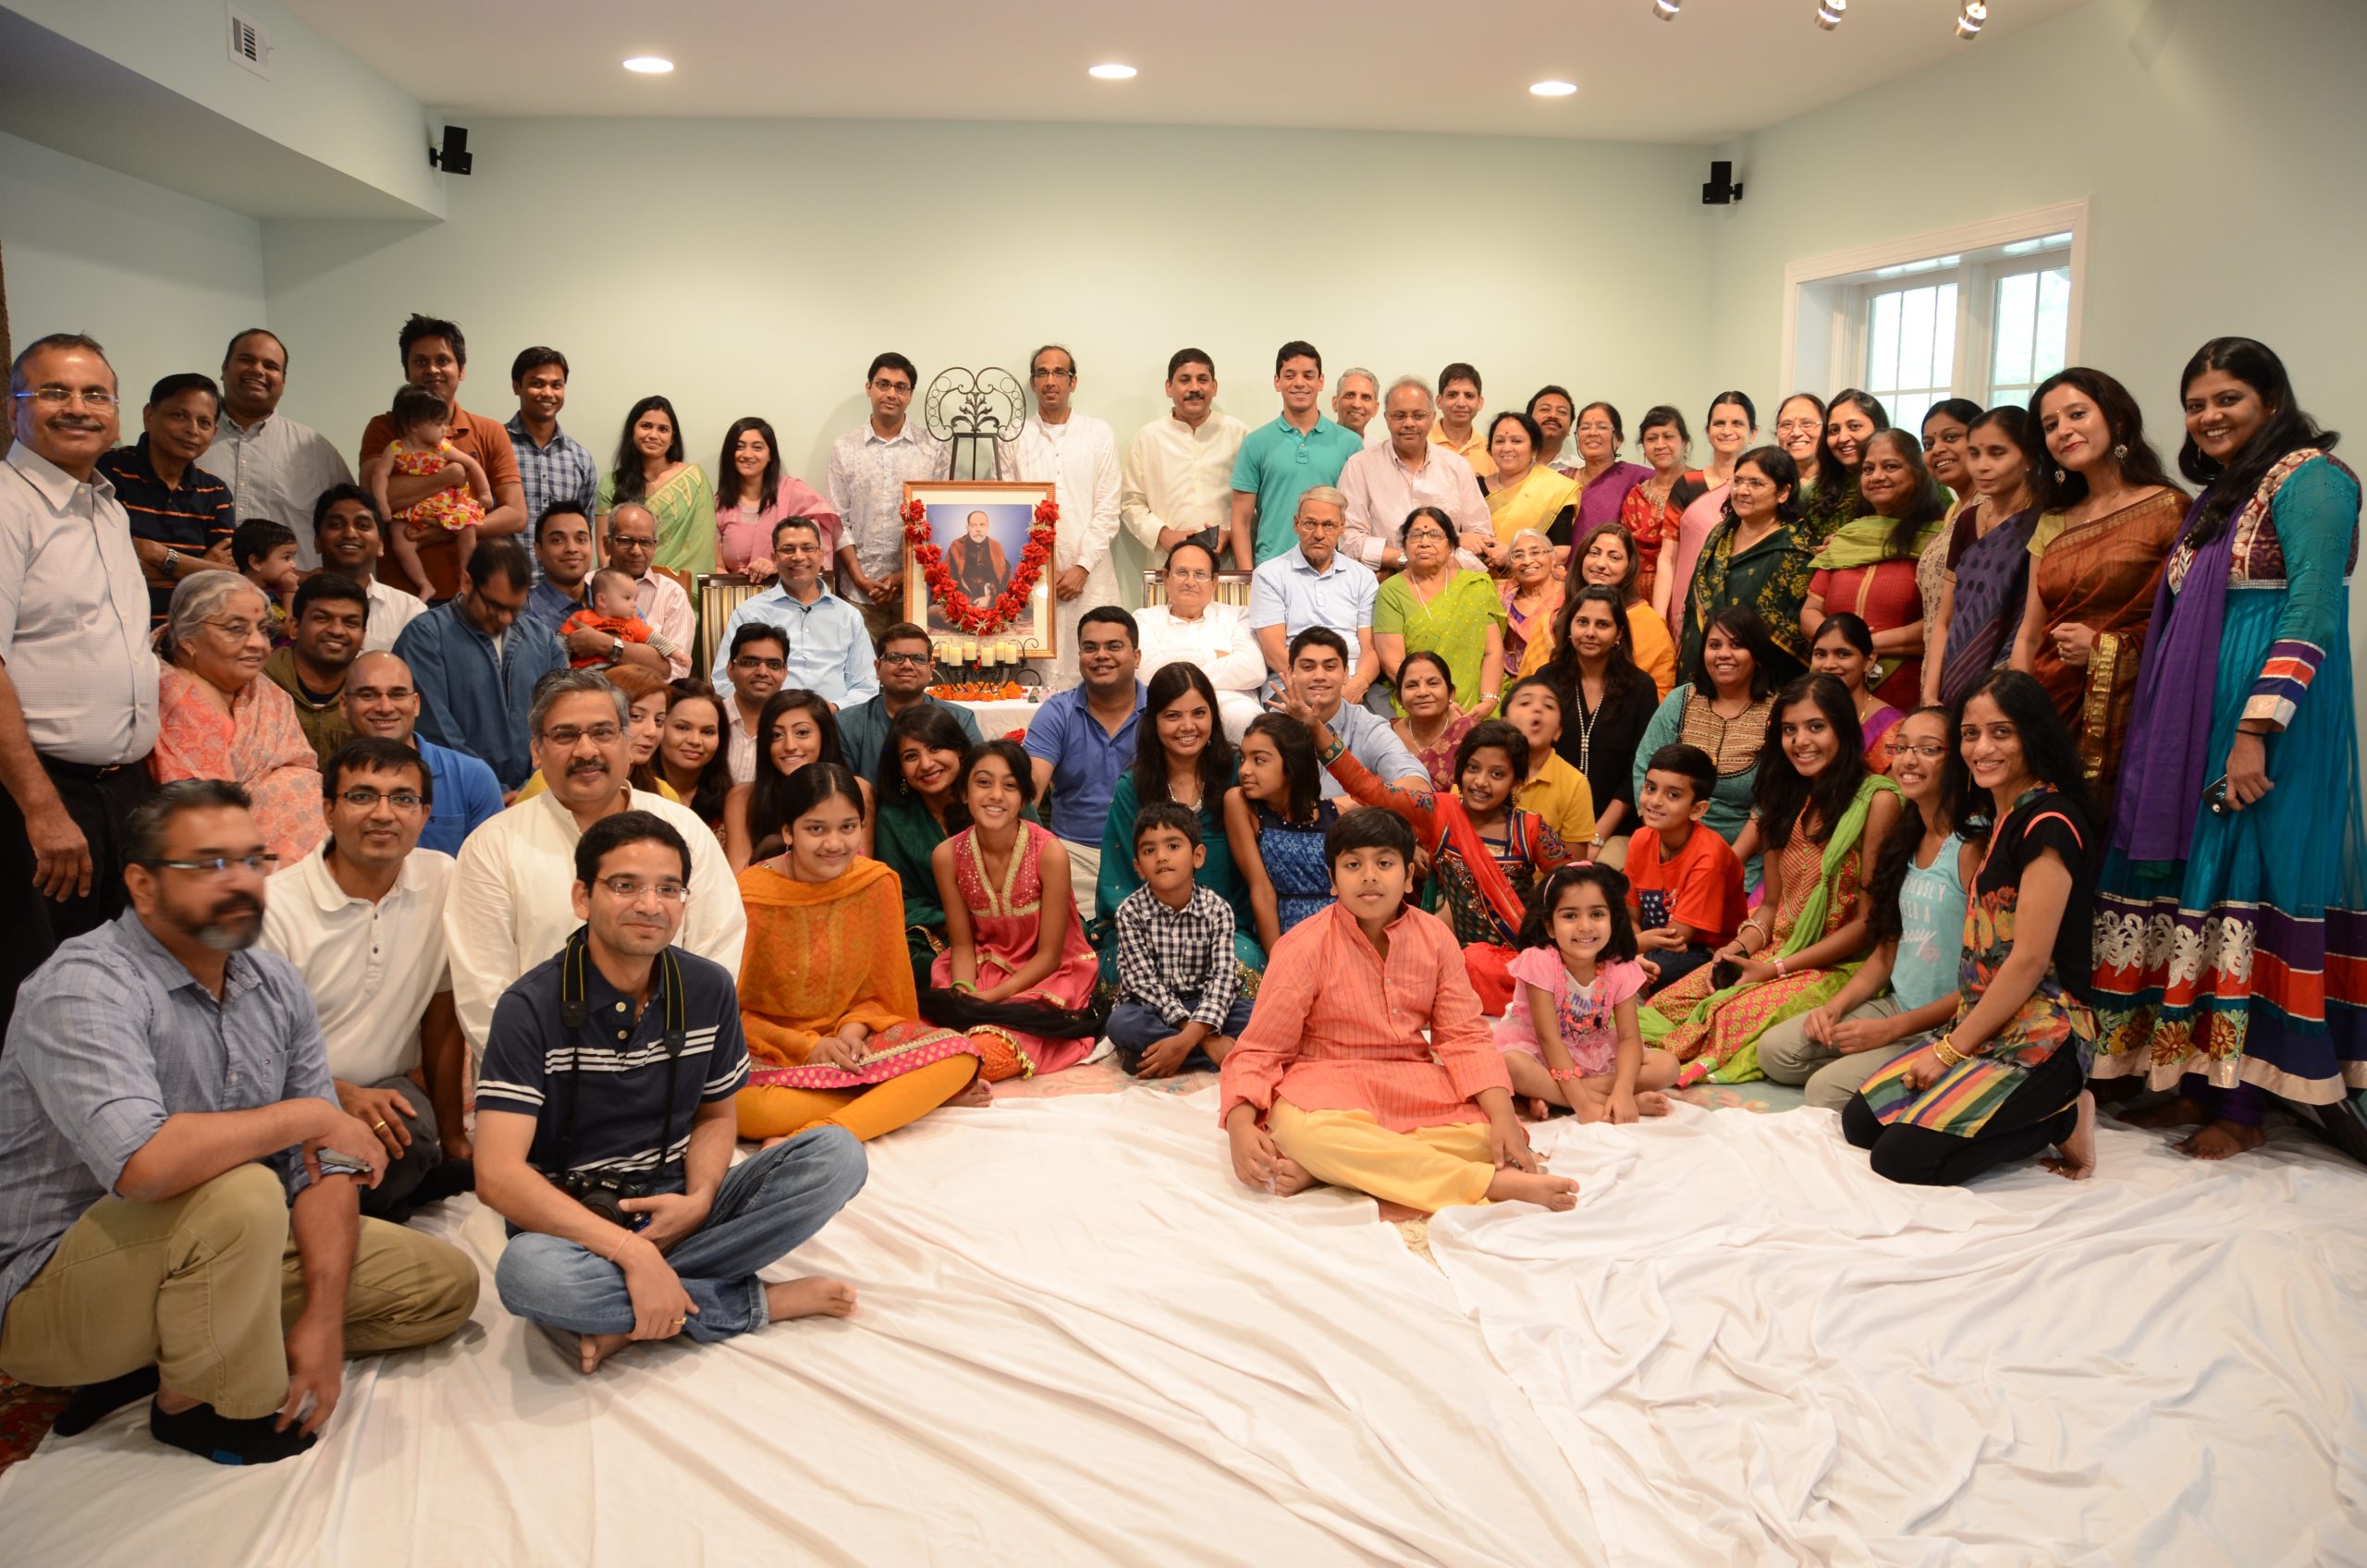 People gathered to understand true happiness through satsang
Guru Purnima
